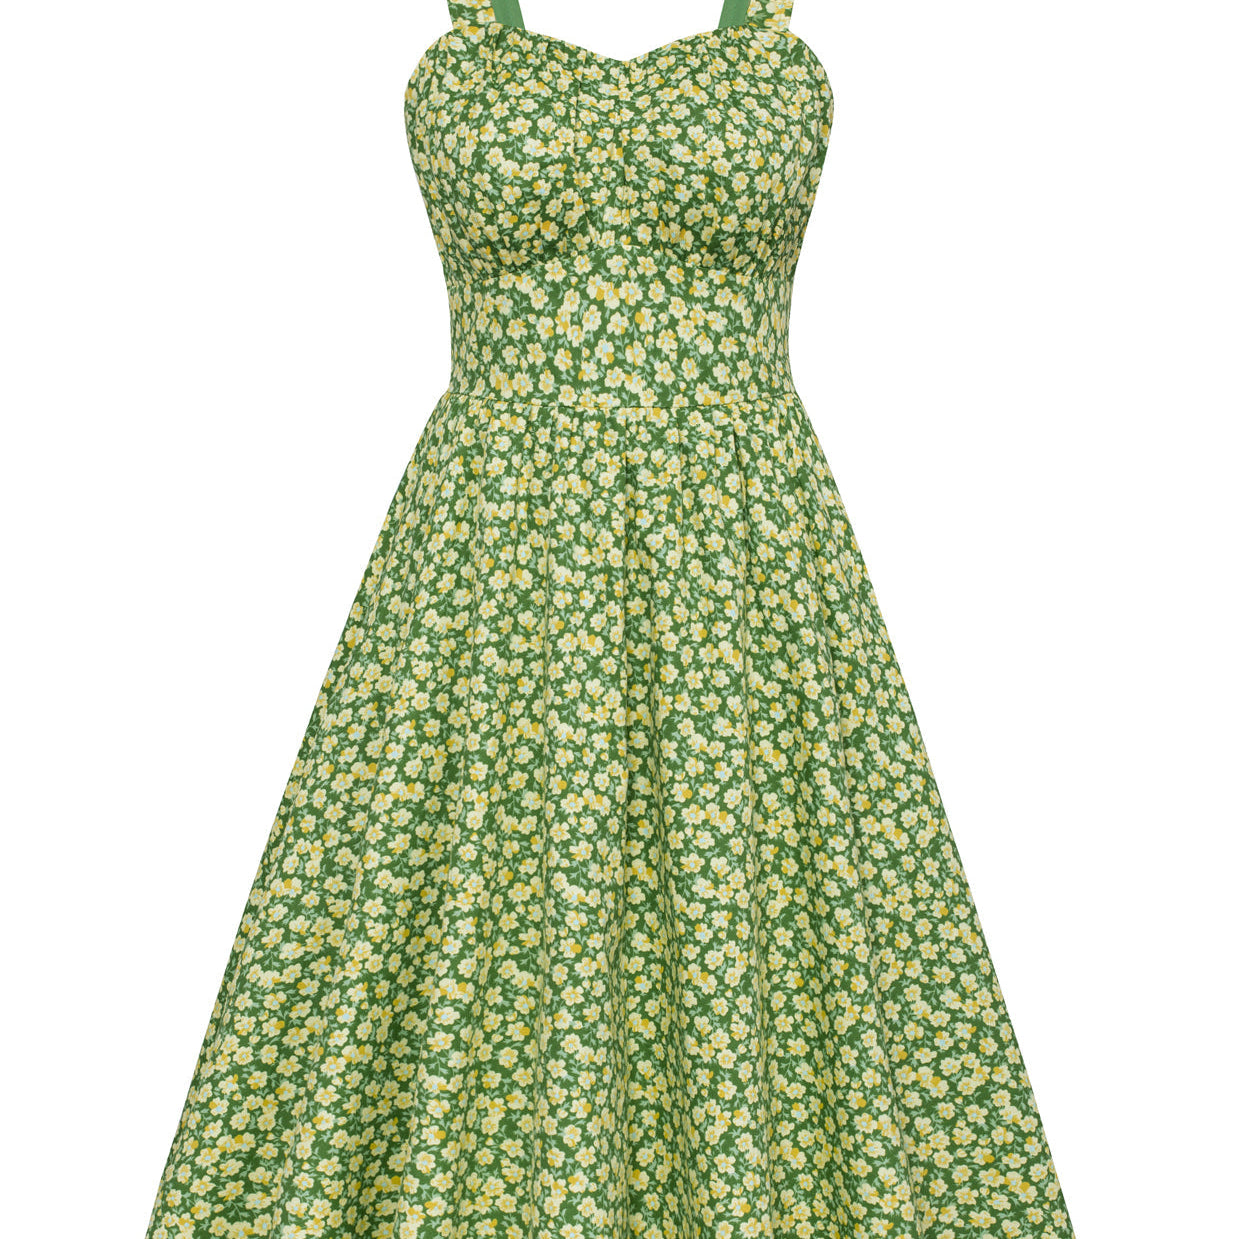 Vintage Two-Way Defined Waist Dress